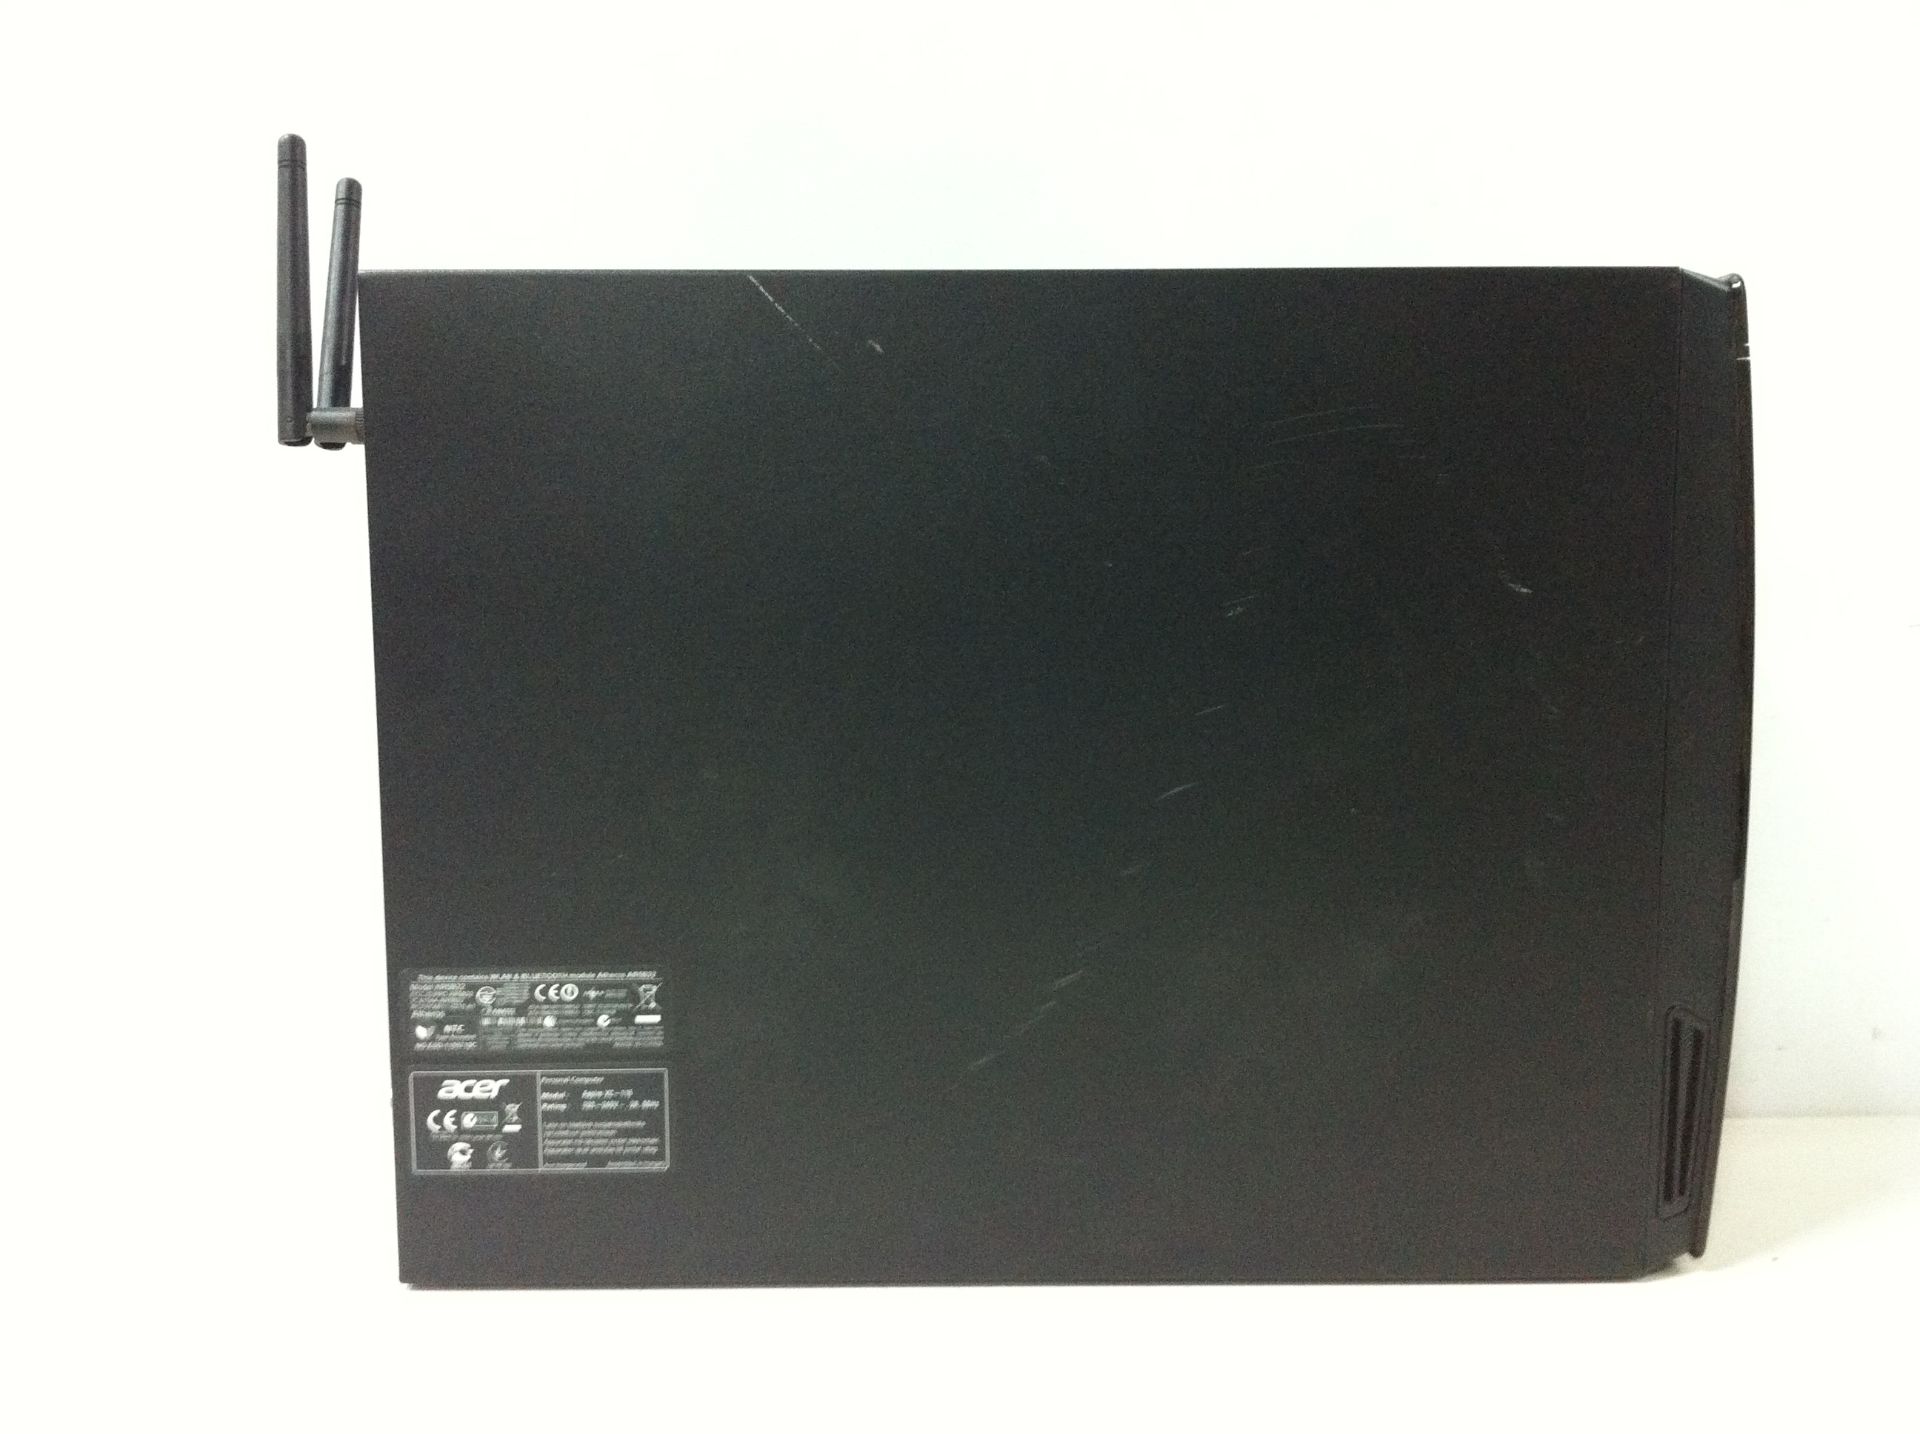 Acer Aspire XC-115 PC - Image 4 of 4